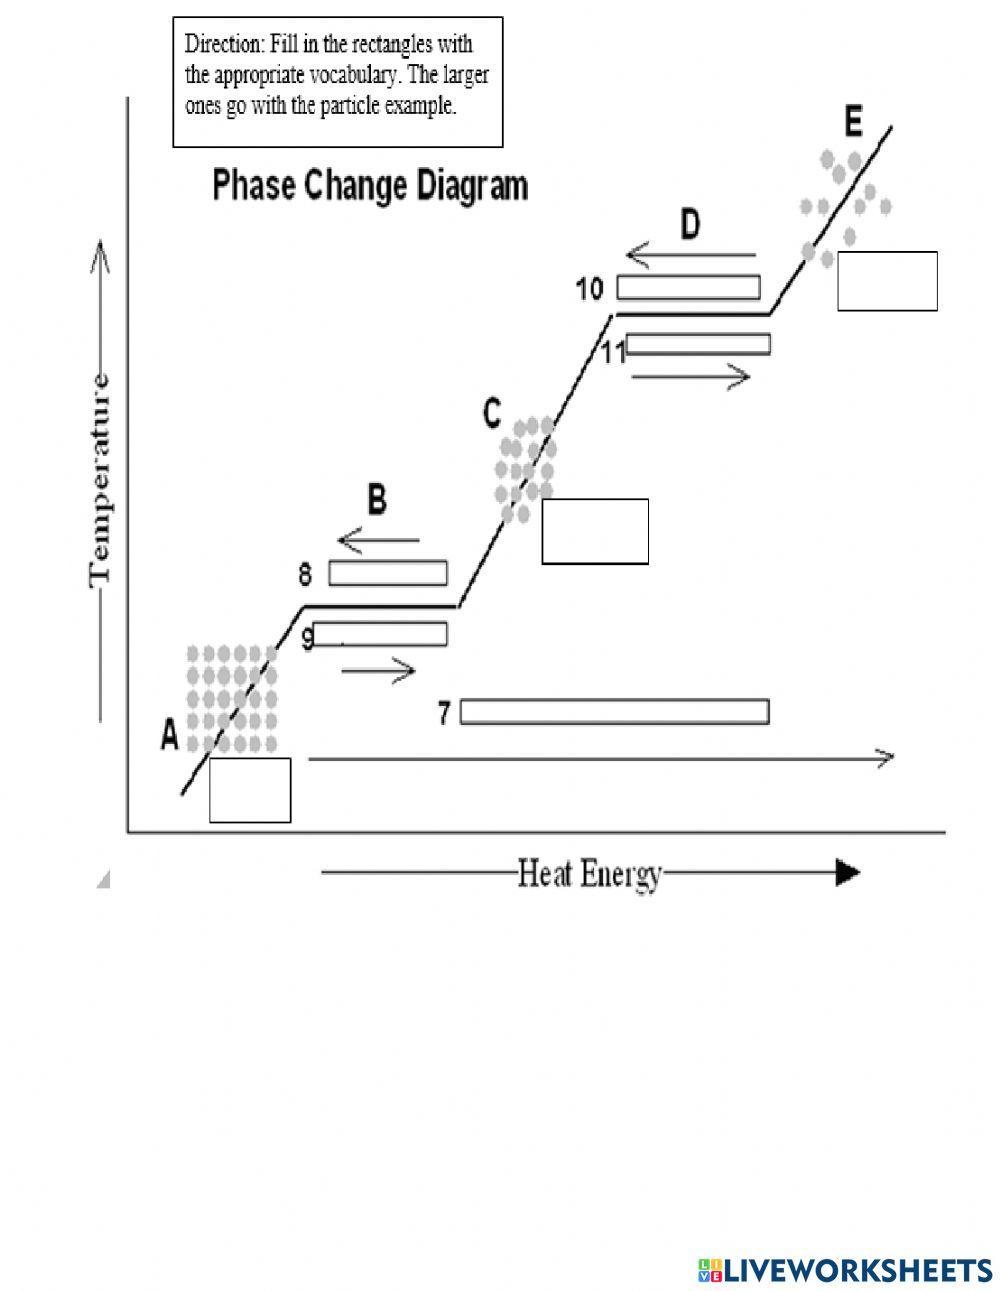 Phase Change Diagram